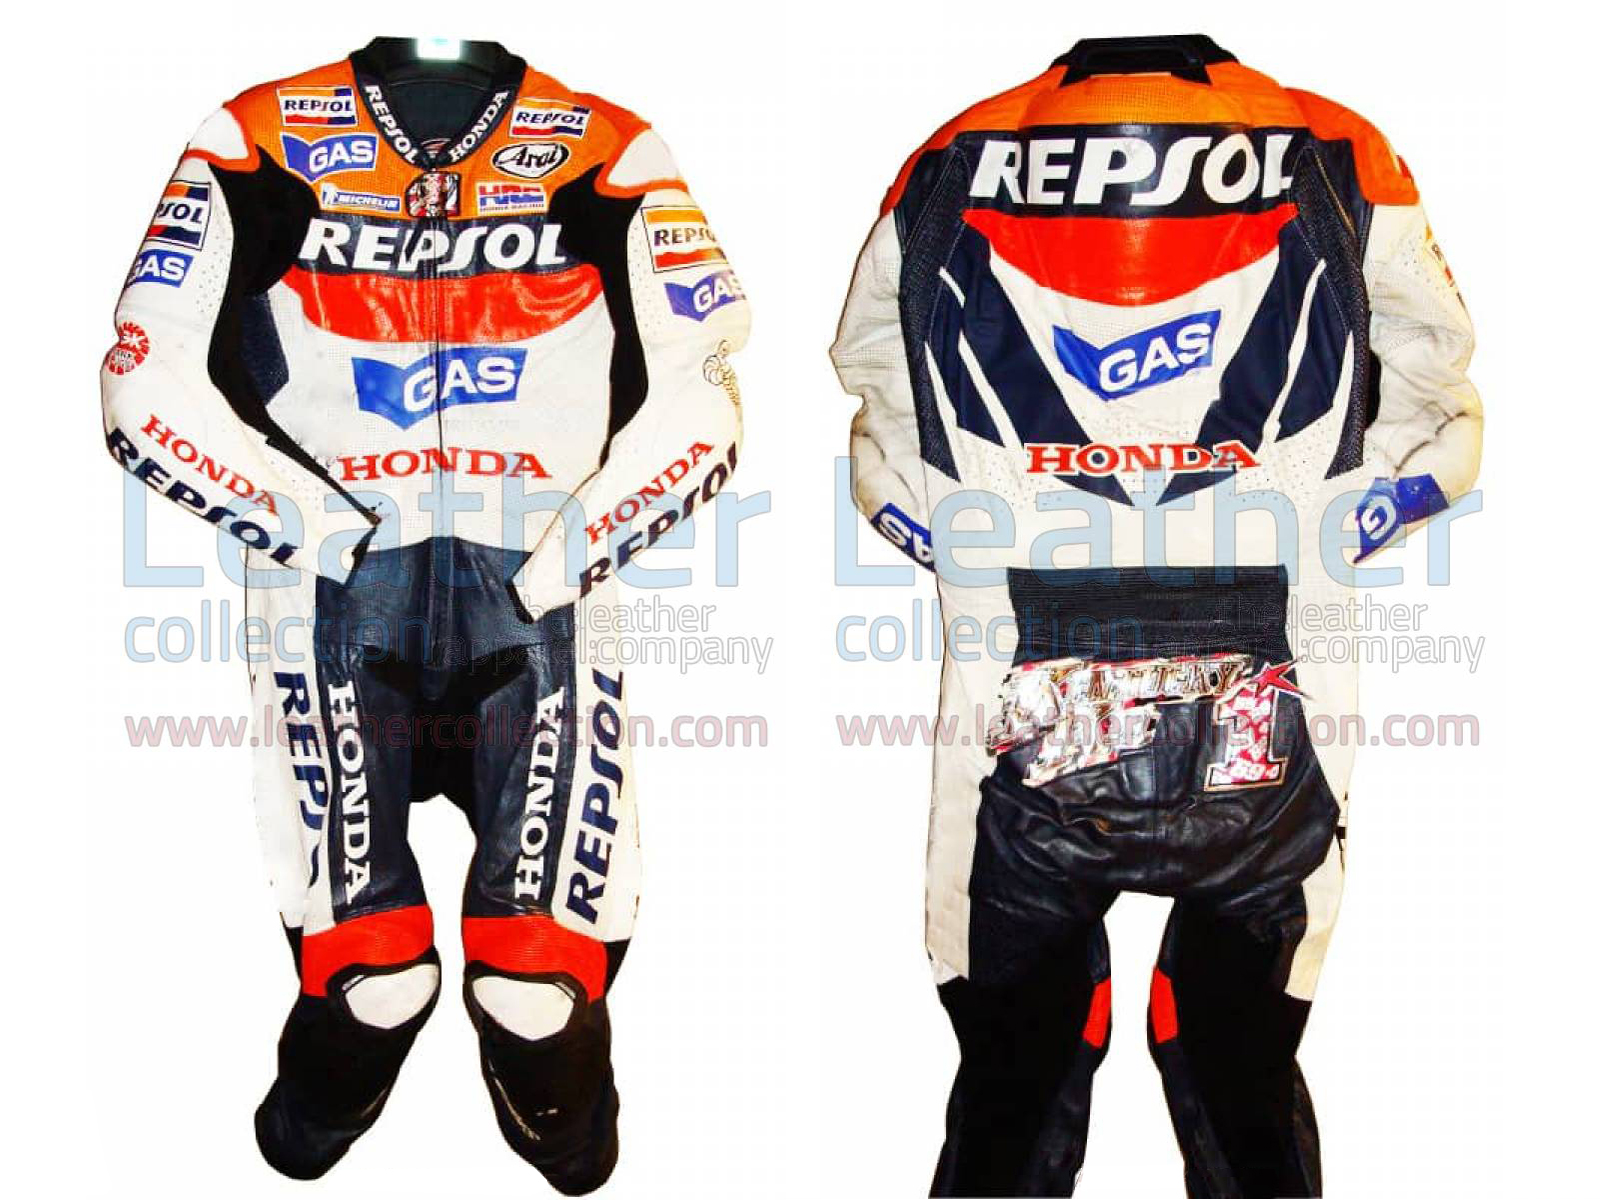 Nicky Hayden Repsol Honda GP 2007 Leathers